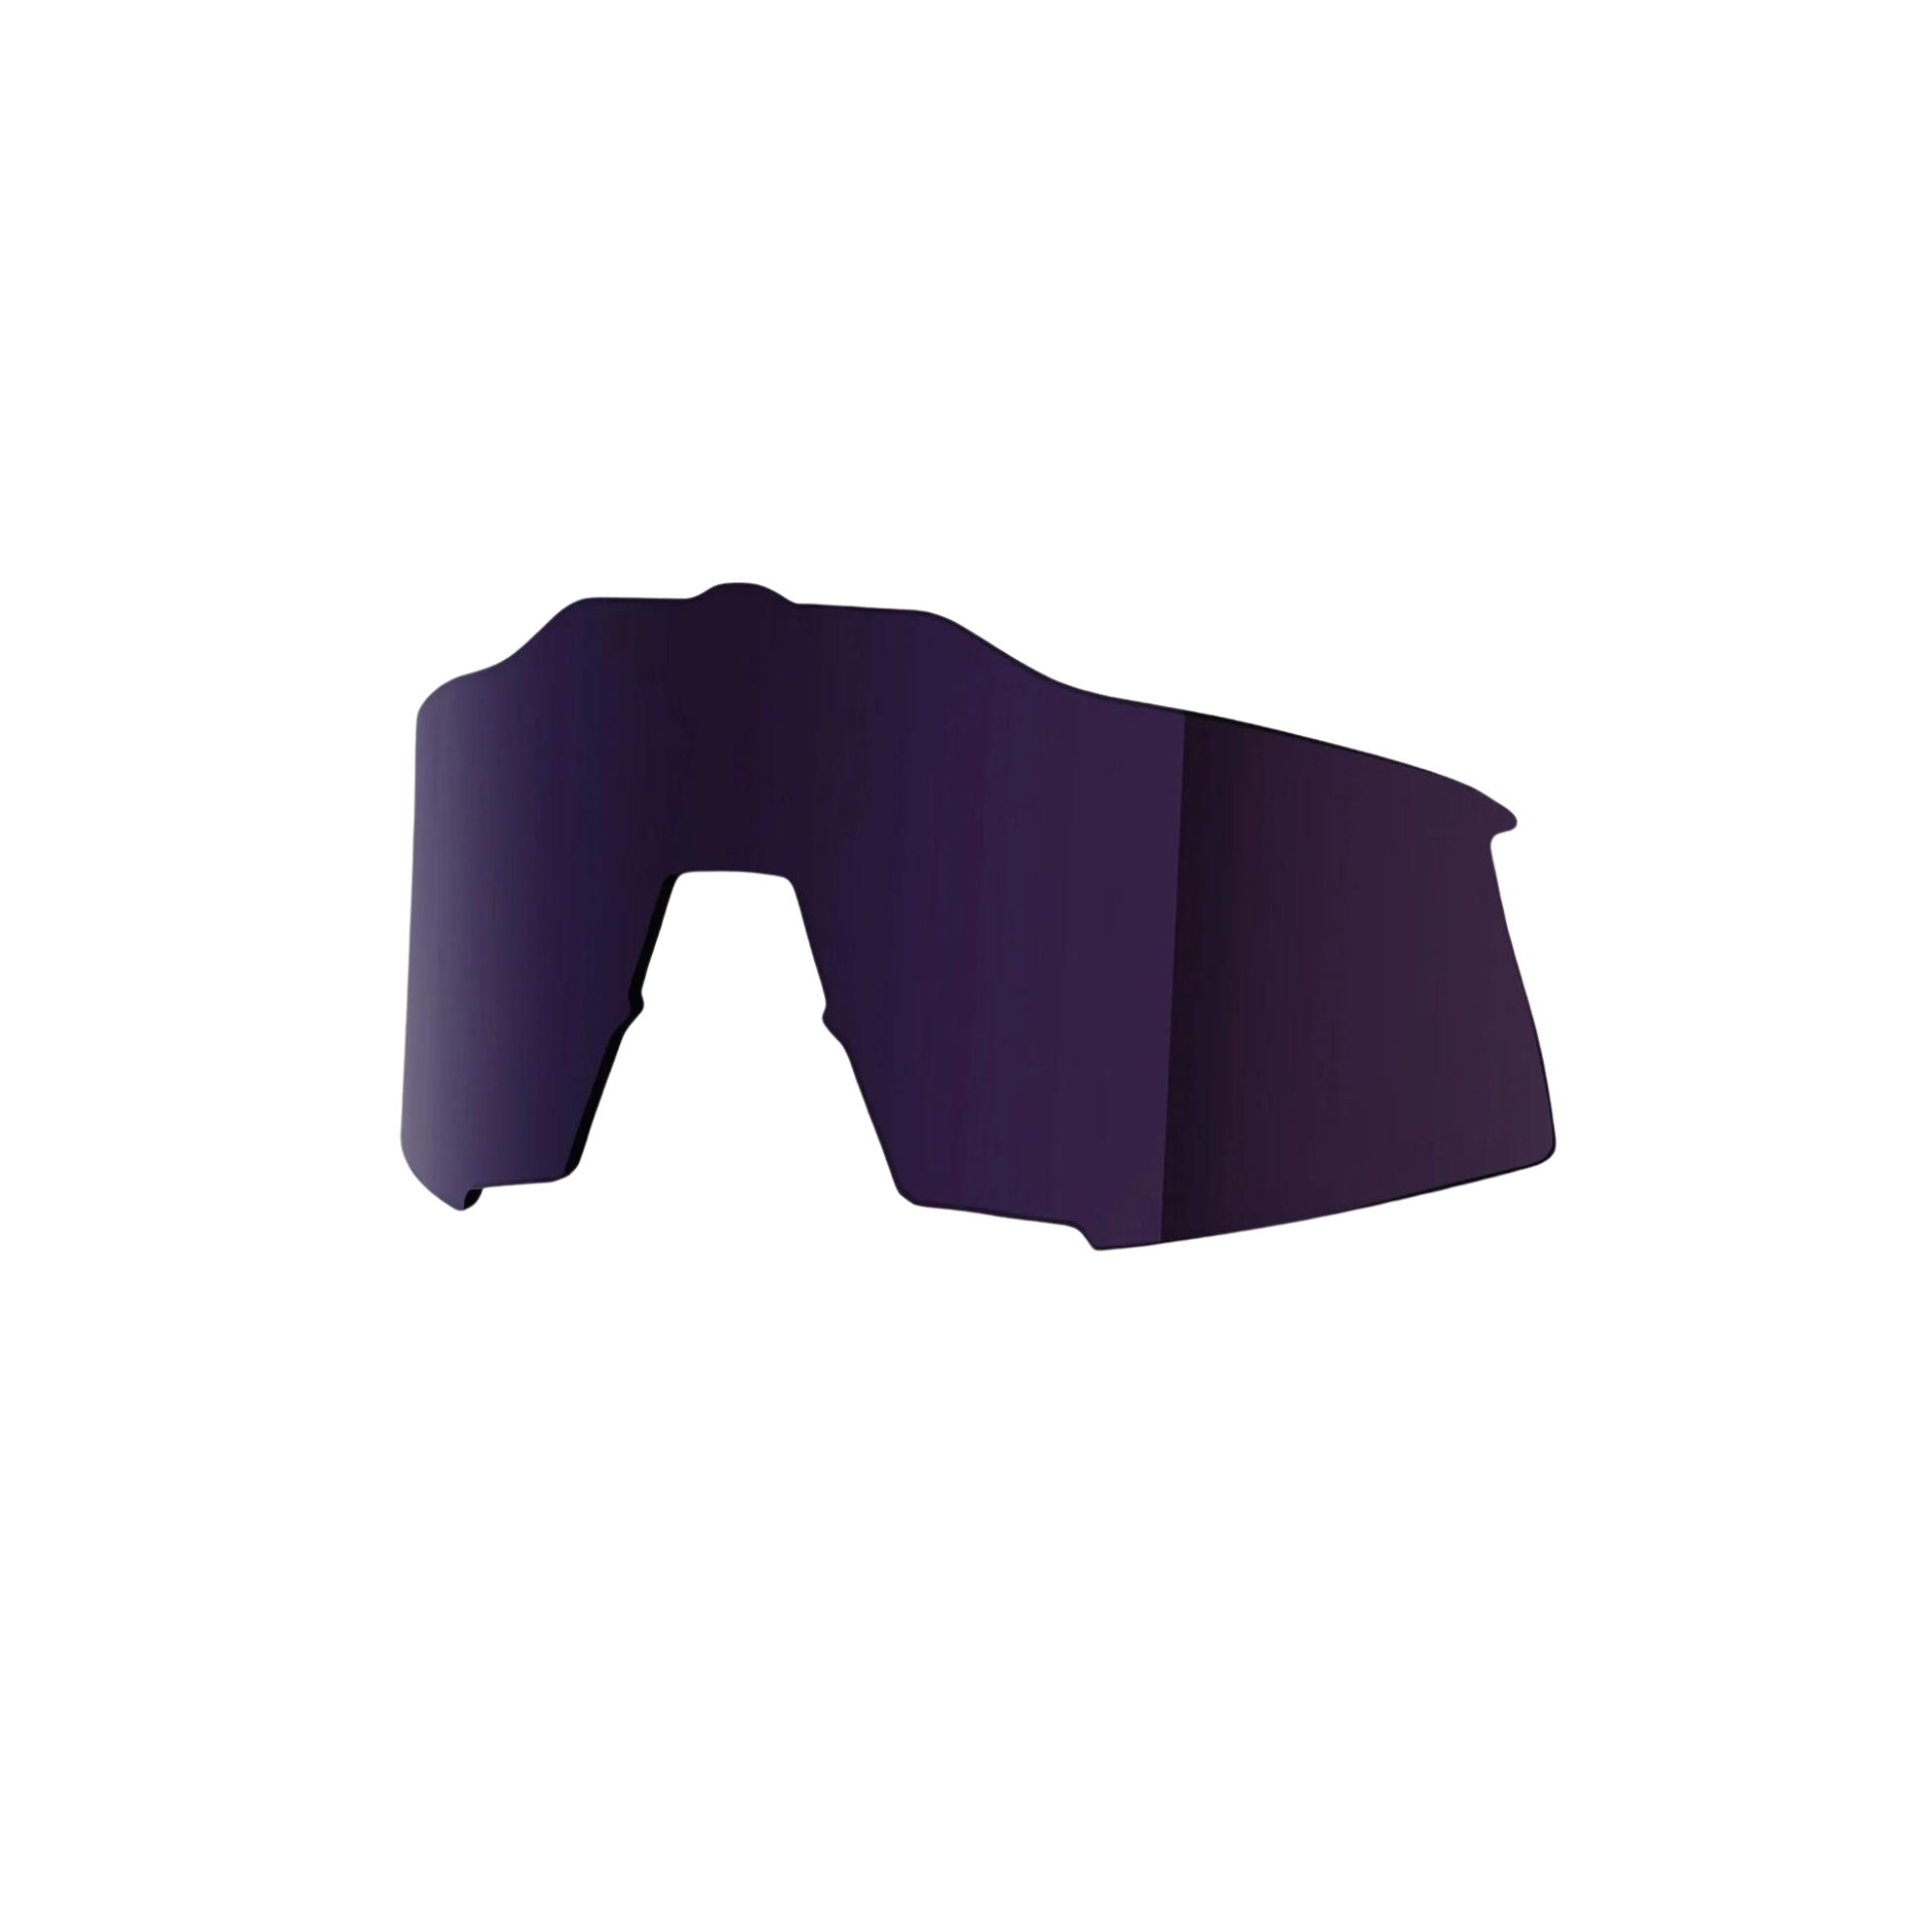 100% SPEEDCRAFT Replacement Lens - Dark Purple